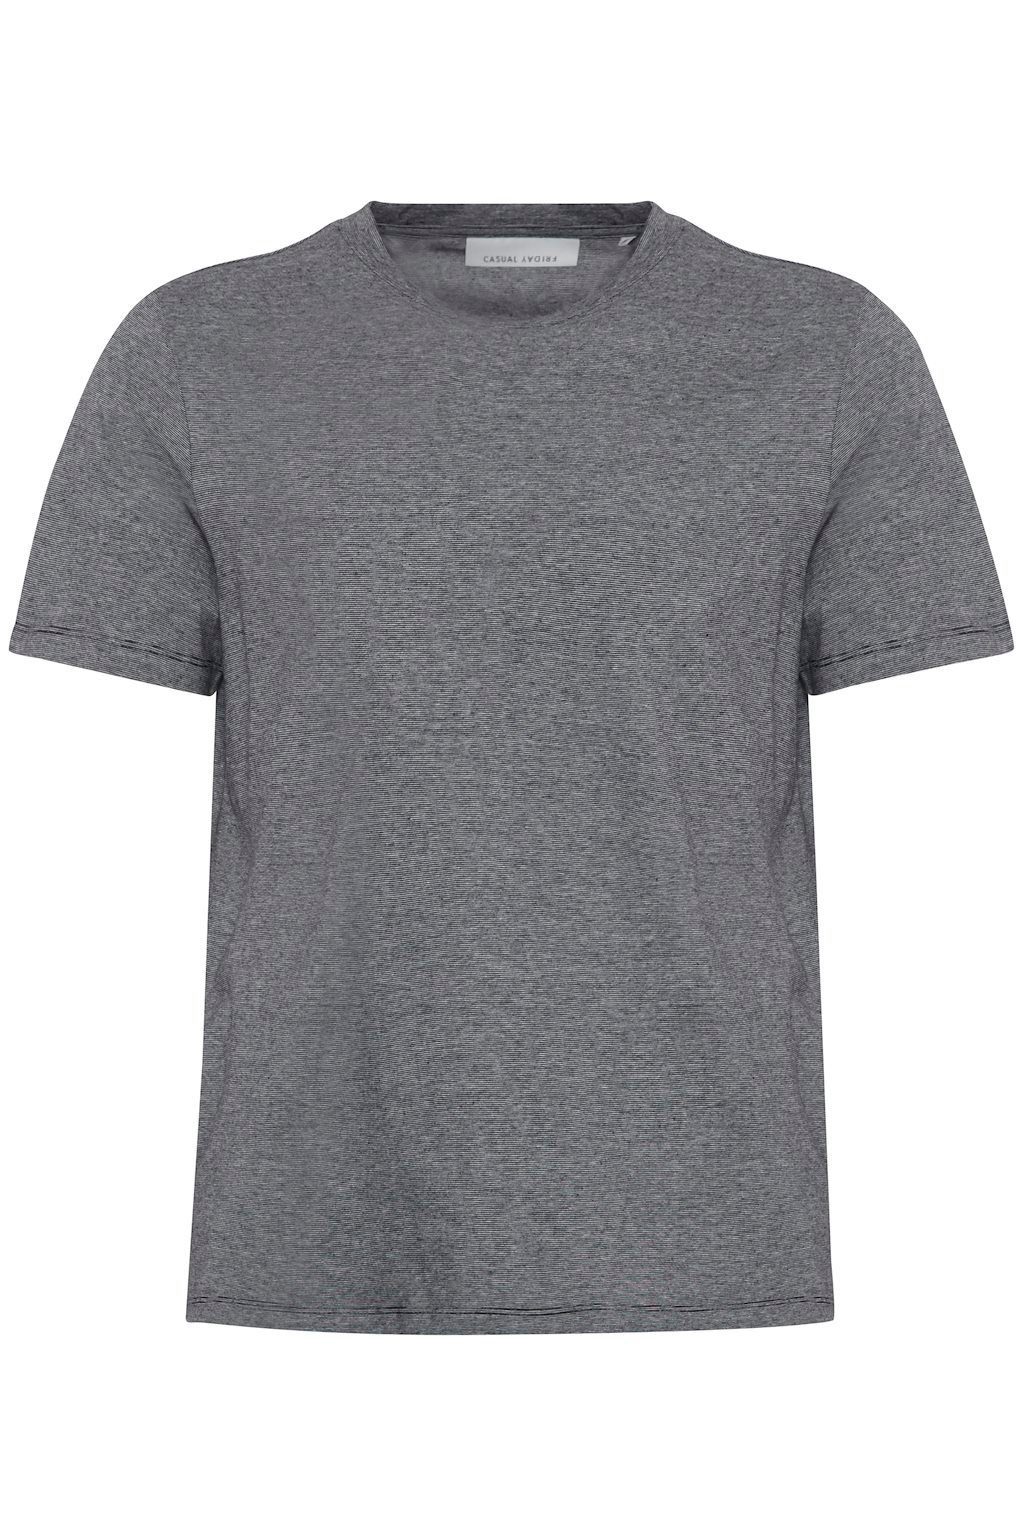 CFThor Basic T-Shirt Friday in Rundhals T-Shirt Meliert Casual Grau 5743